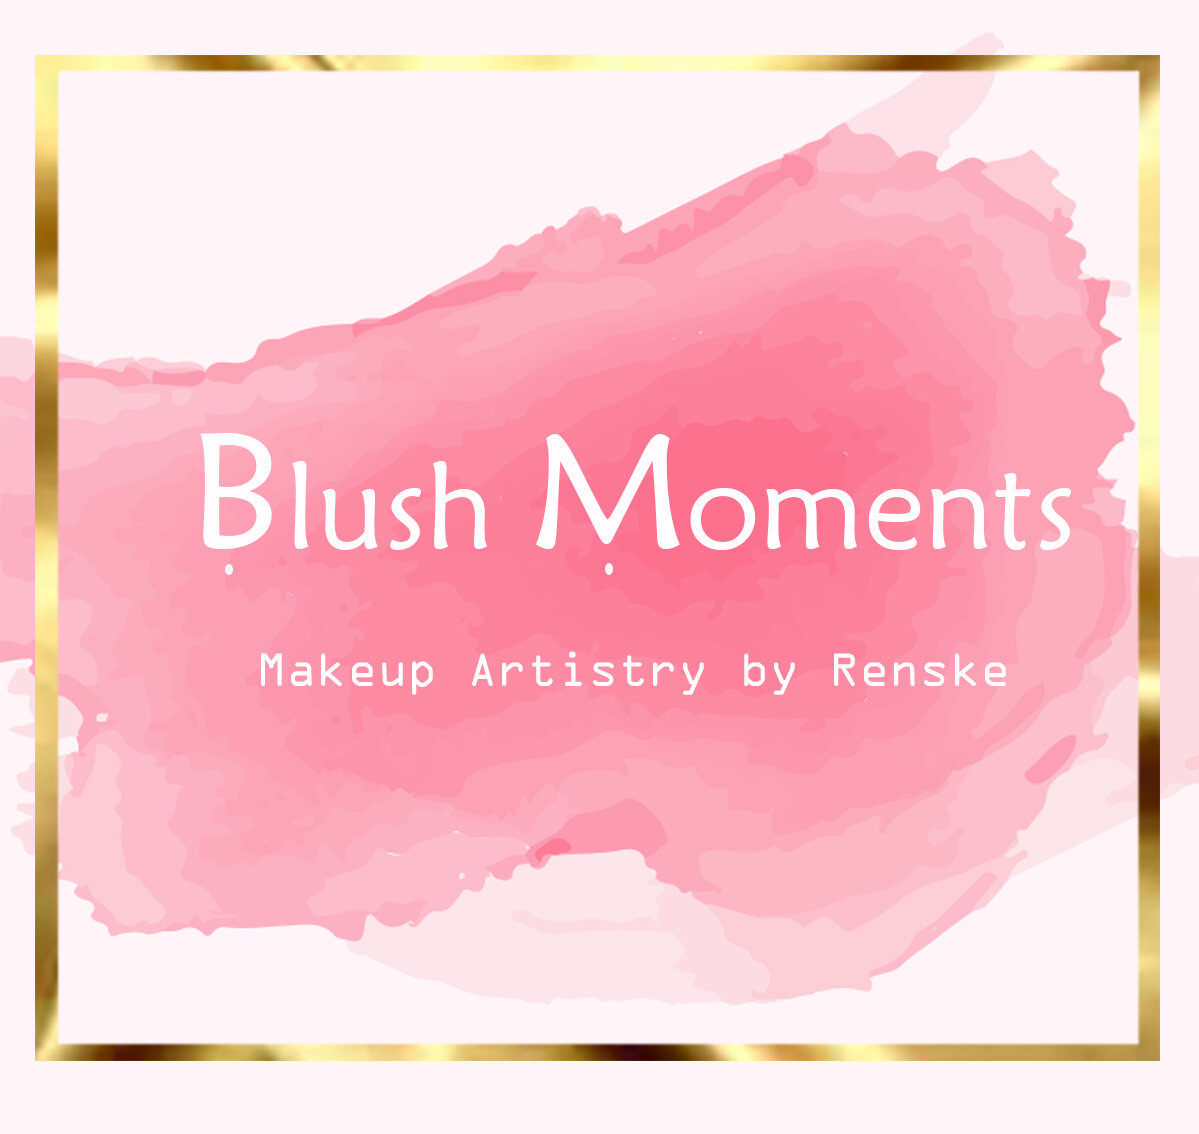 Blush Moments by Renske